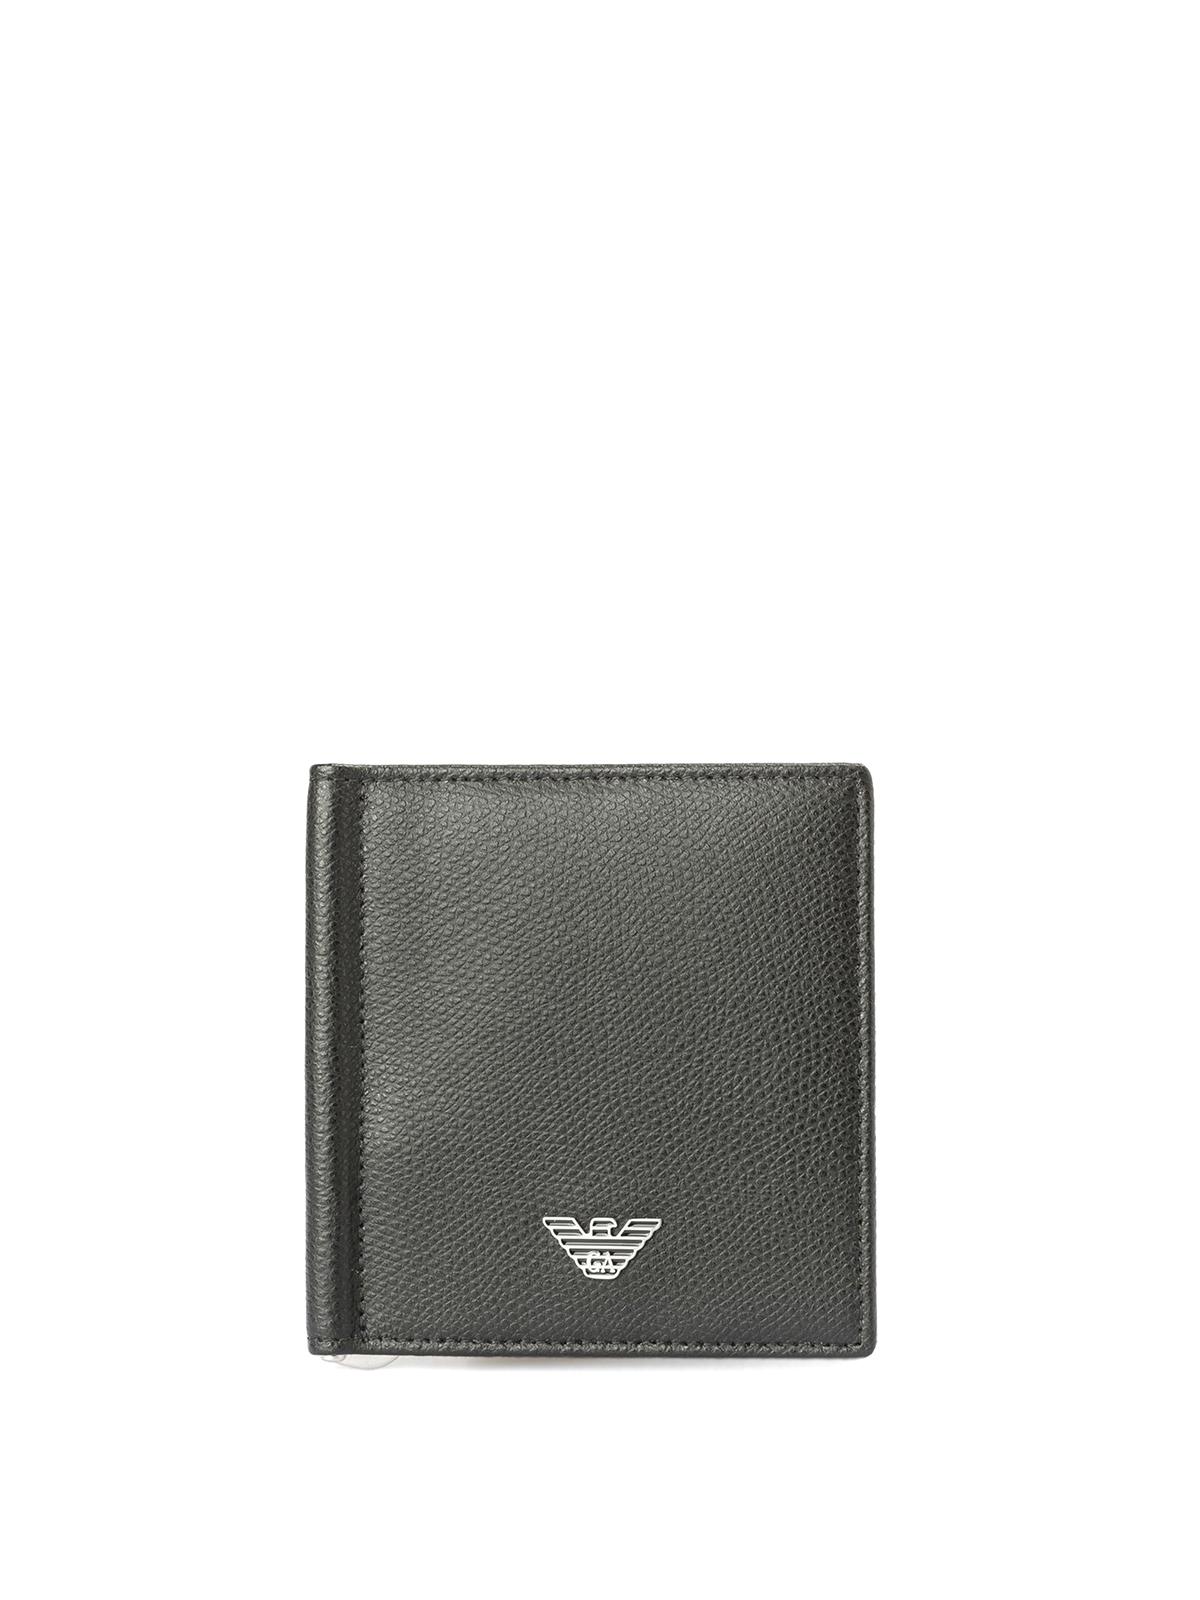 Emporio Armani Leather Bifold Money Clip Wallet in Black for Men - Lyst